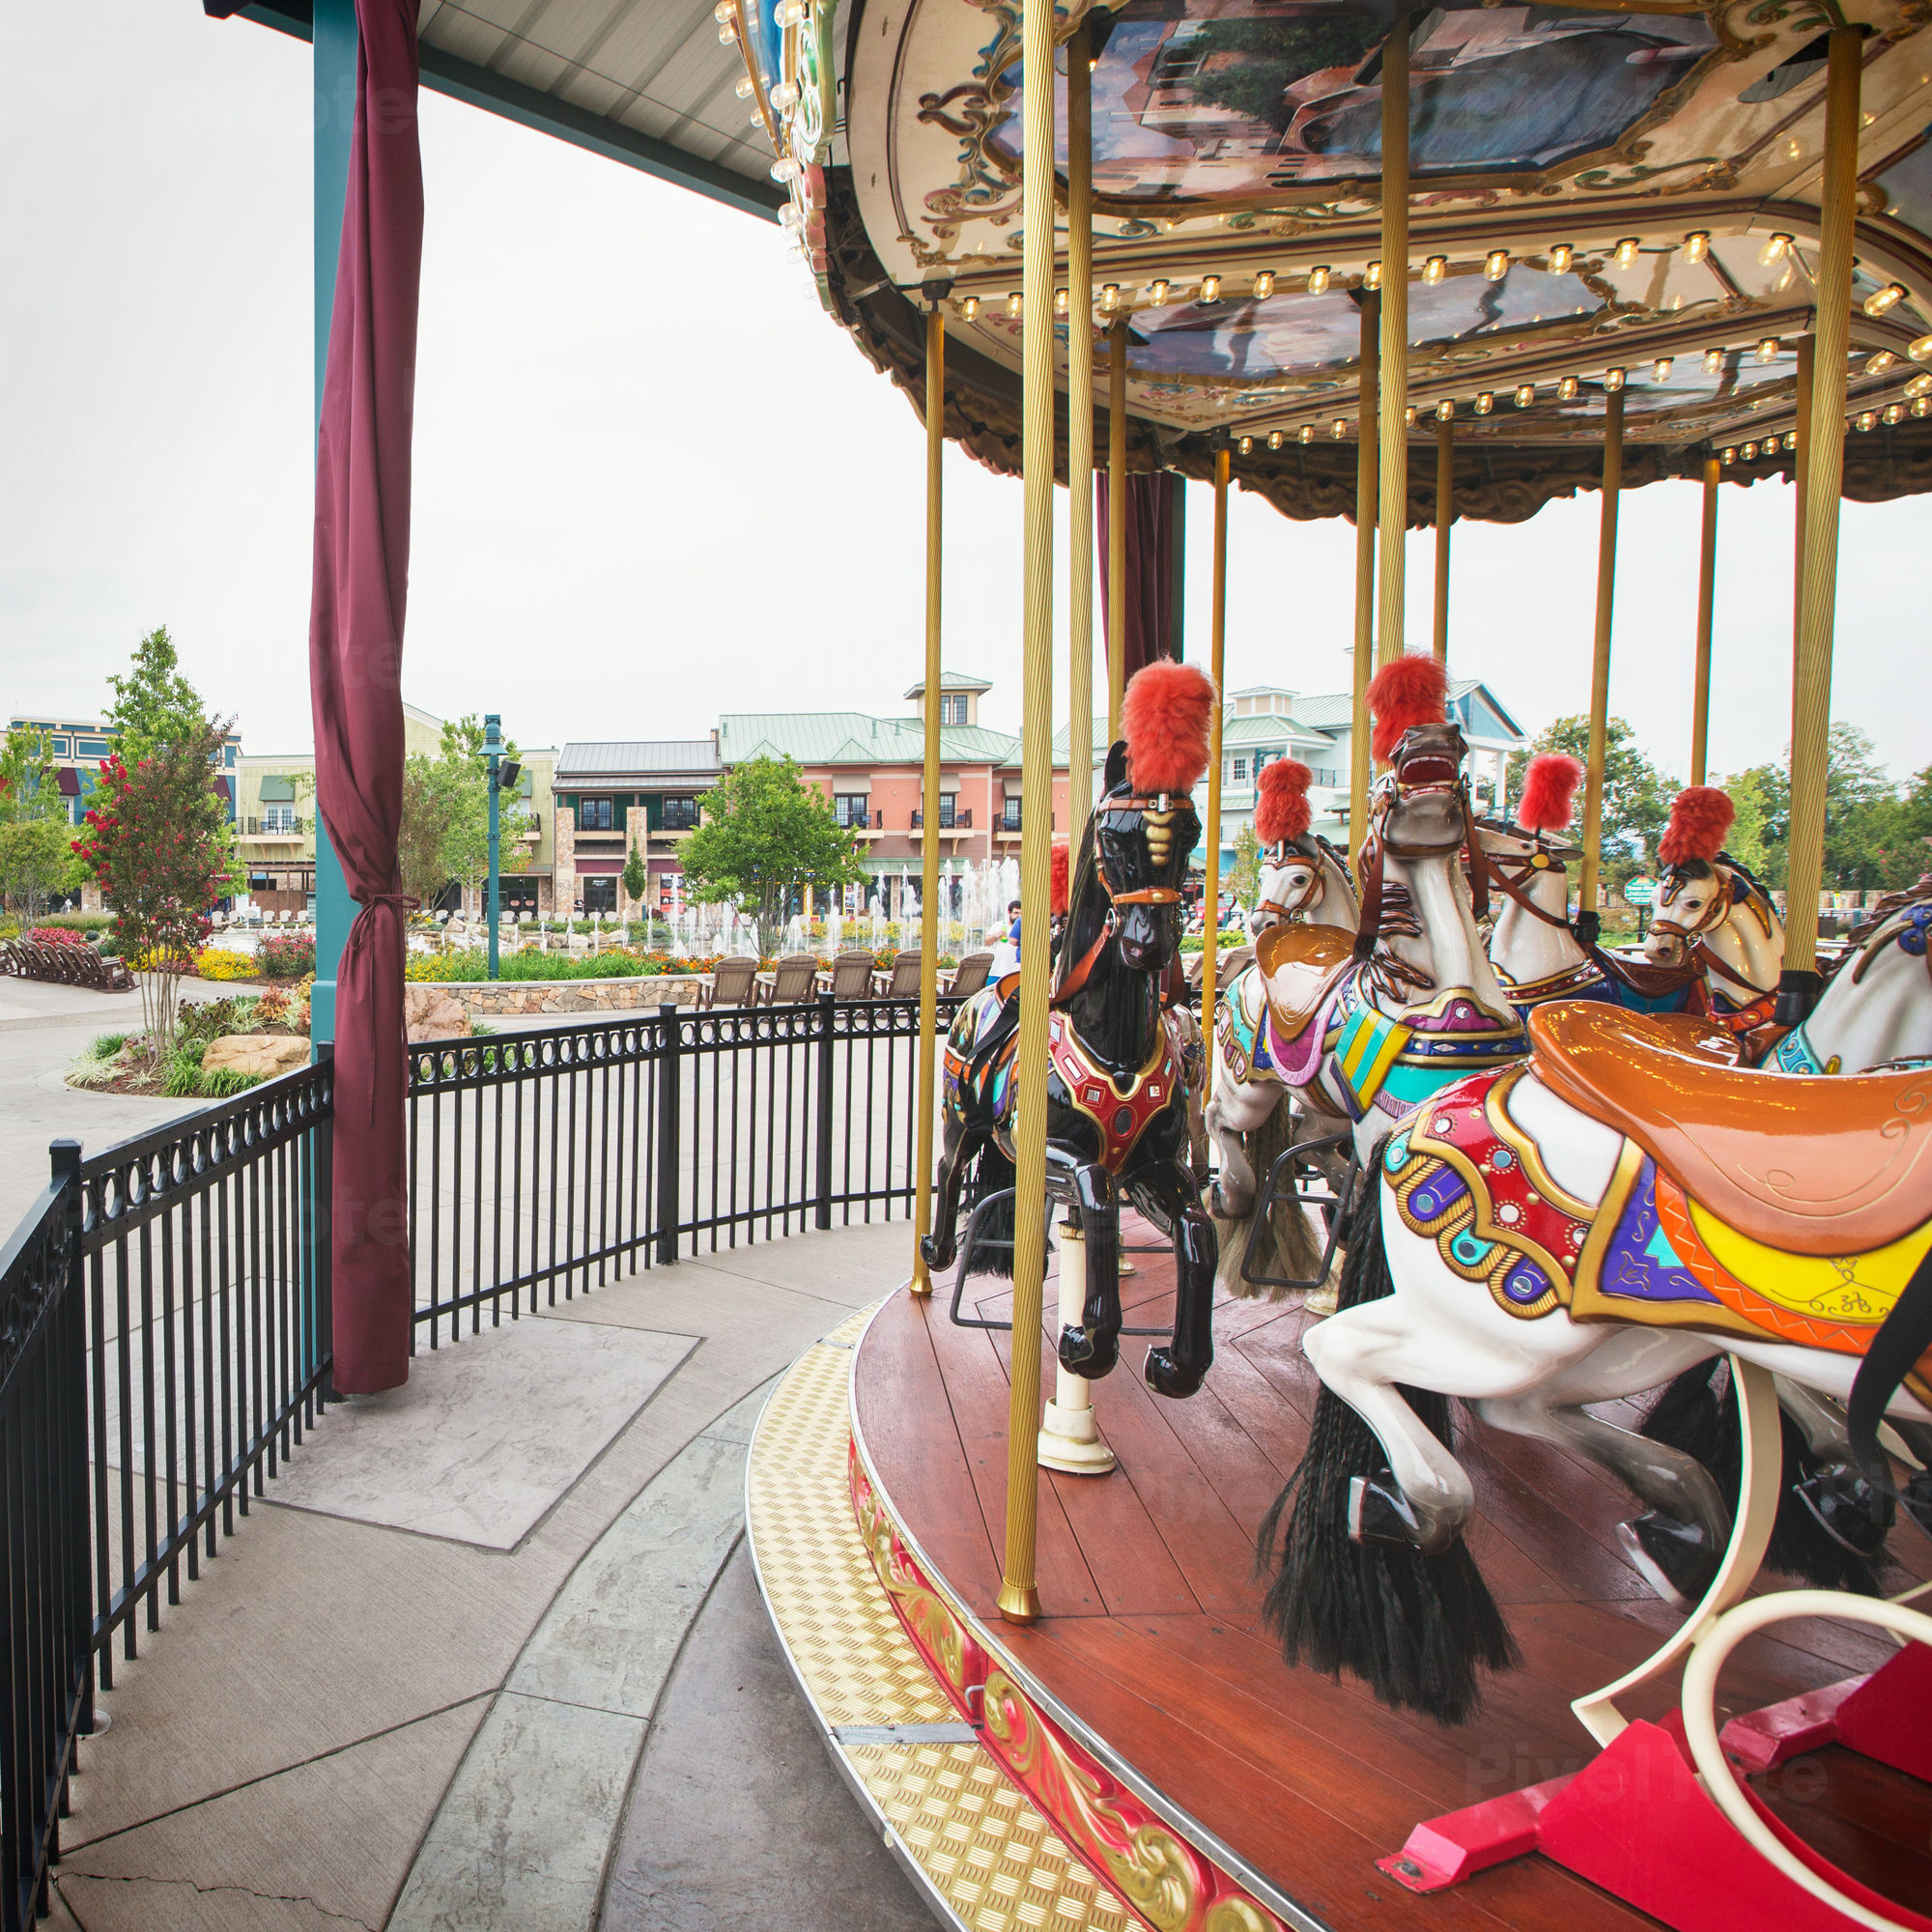 Carousel horses, Merry go round, Amusement park, Stock photo, 2000x2000 HD Handy